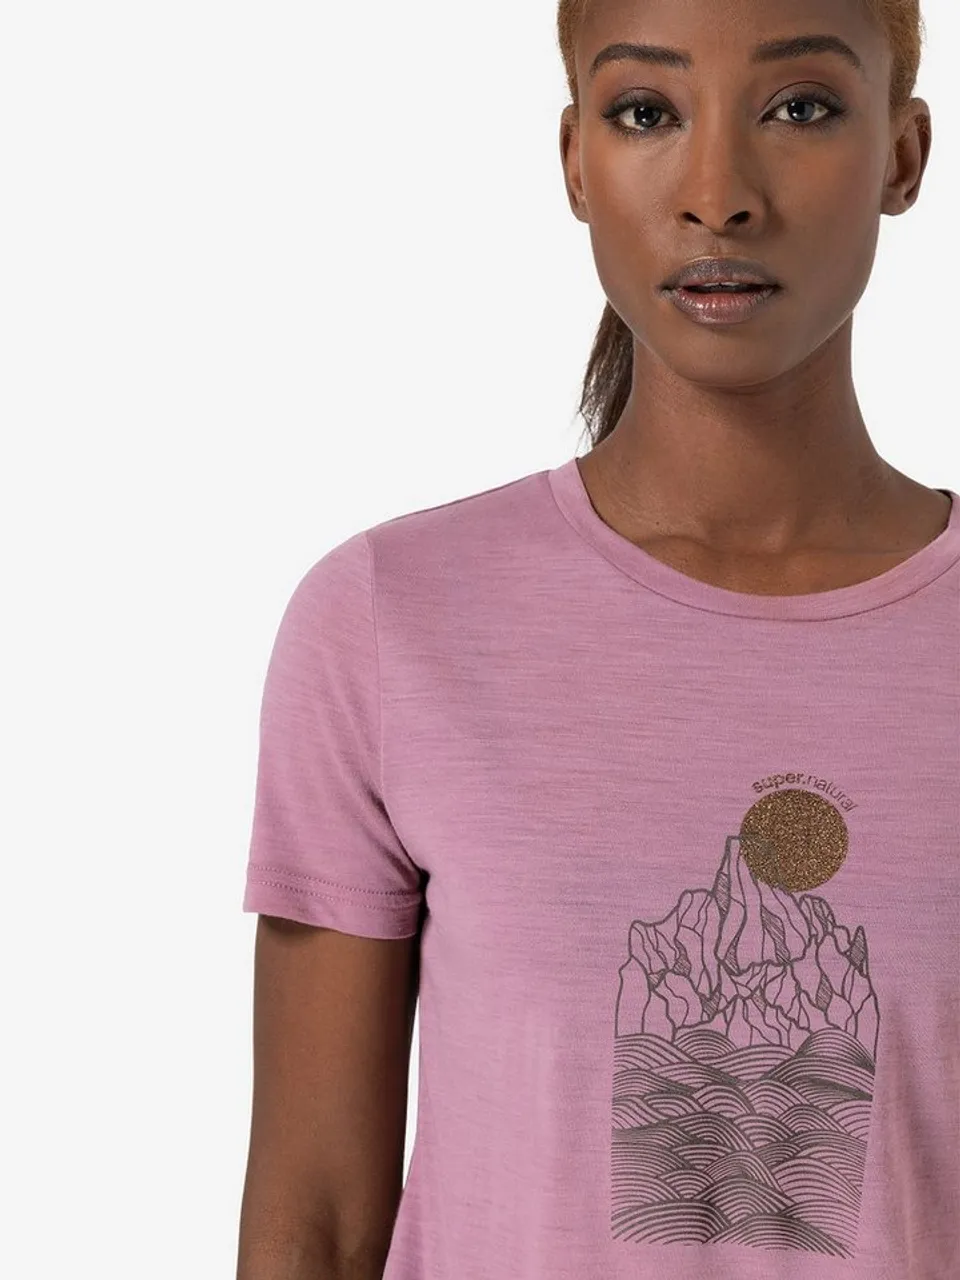 SUPER.NATURAL T-Shirt für Damen, Merino PREIKESTOLEN CLIFFS Berg Motiv, casual